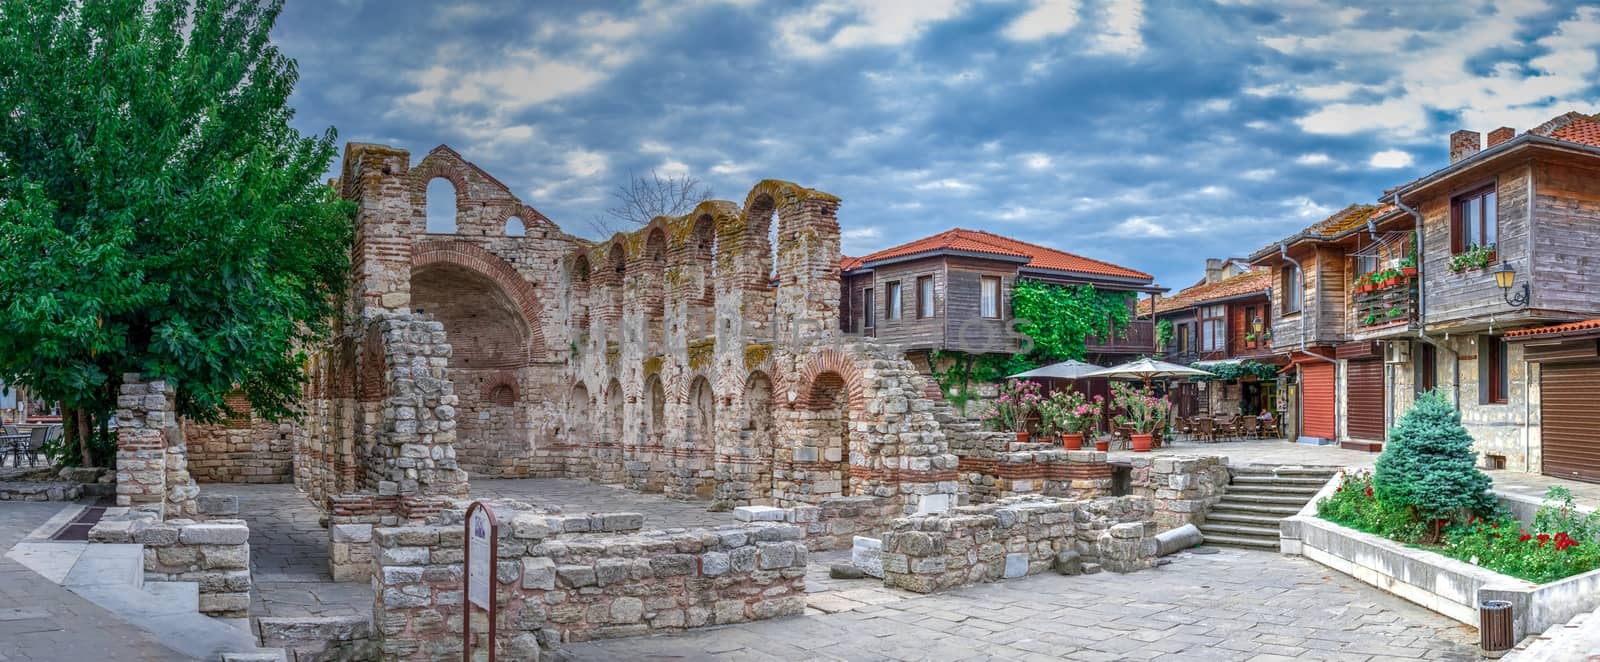 St Sophia Church in Nessebar, Bulgaria by Multipedia